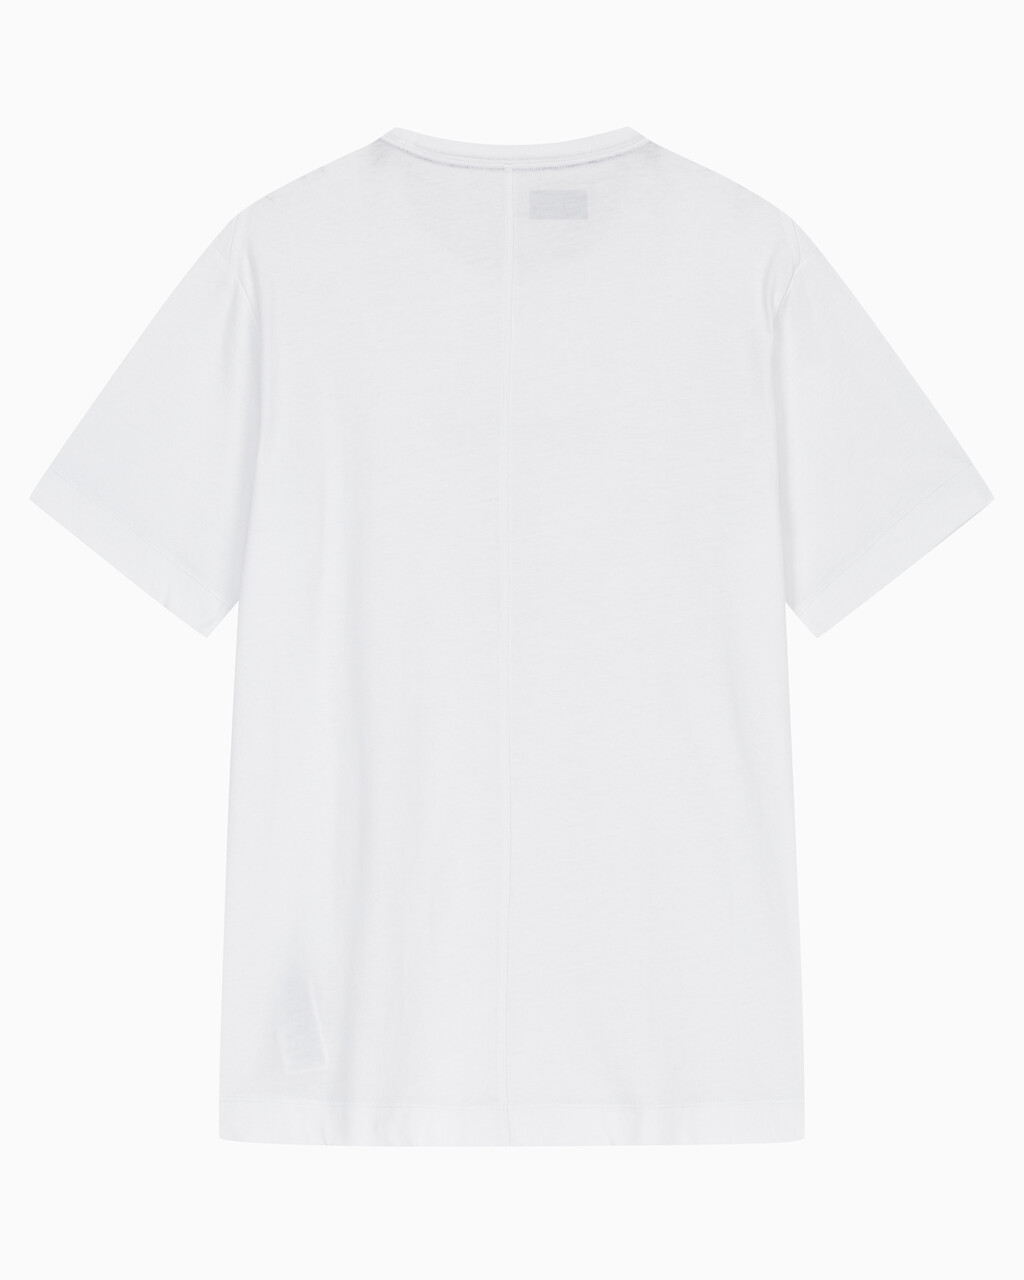 Buy 남성 레귤러 핏 에센셜 로고 반팔 티셔츠 in color BRIGHT WHITE